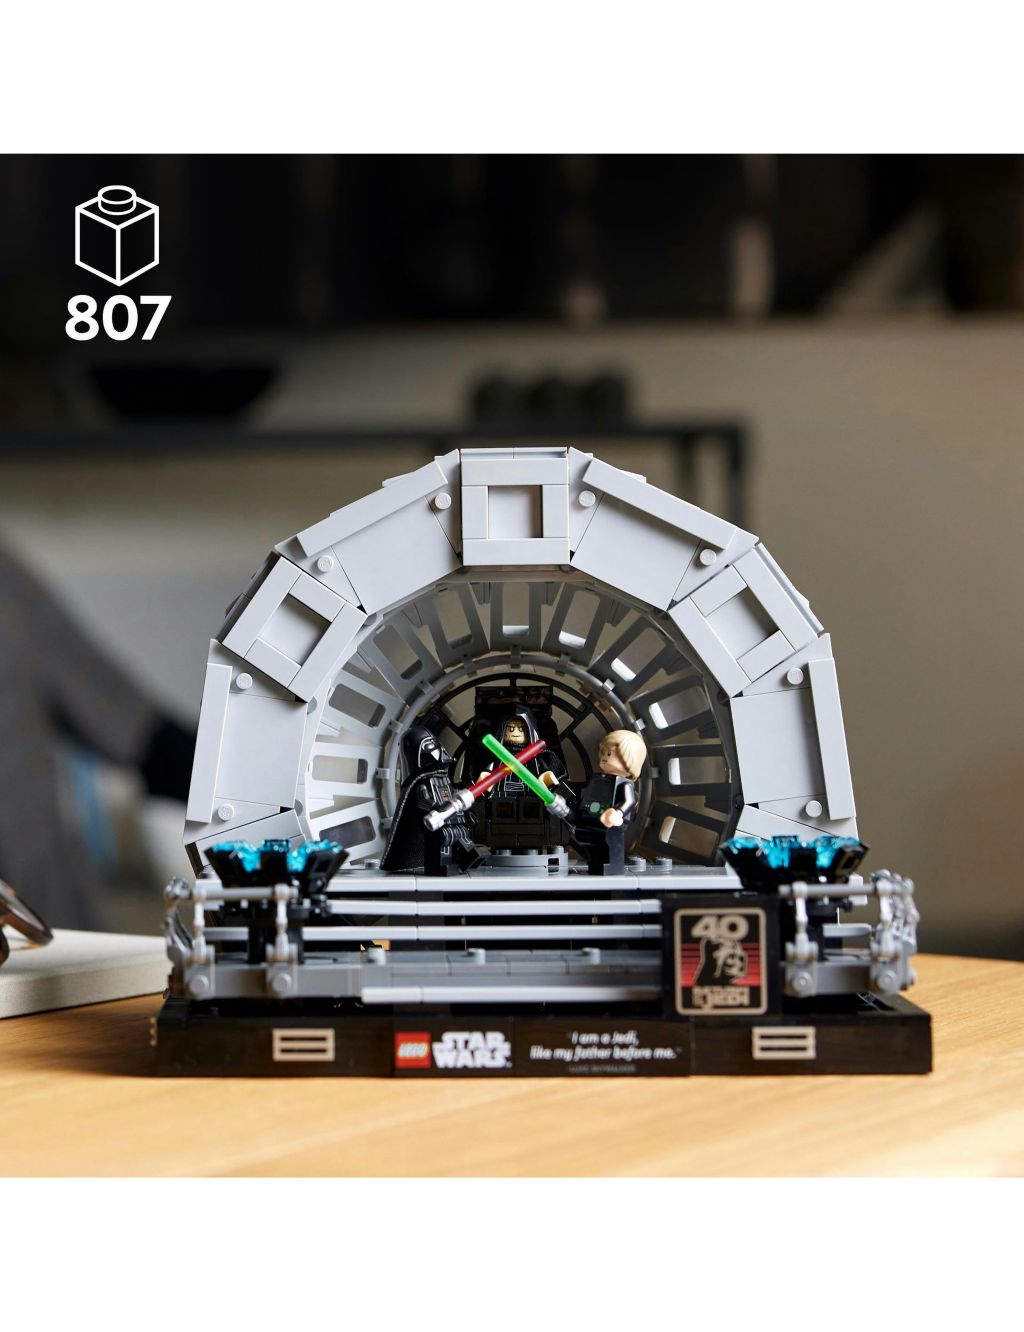 LEGO Star Wars Emperor's Throne Room Diorama 75352 (18+ Yrs) 6 of 7